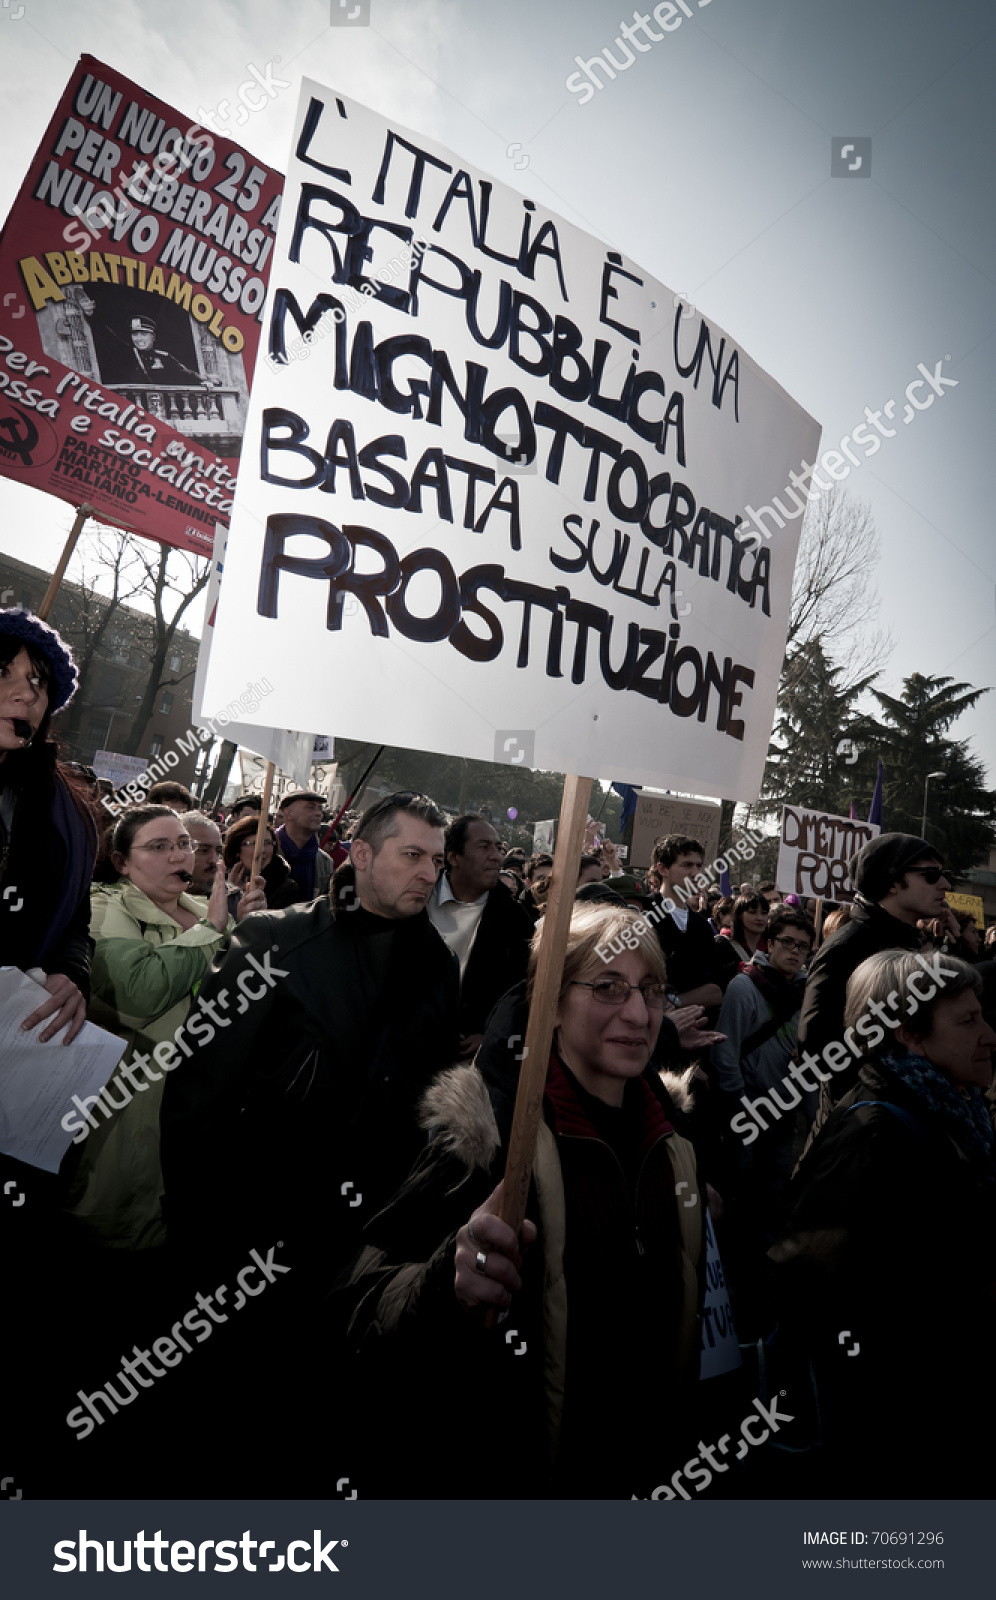 Milan Italy February 06 Demonstration Held Stock Photo 70691296 ...